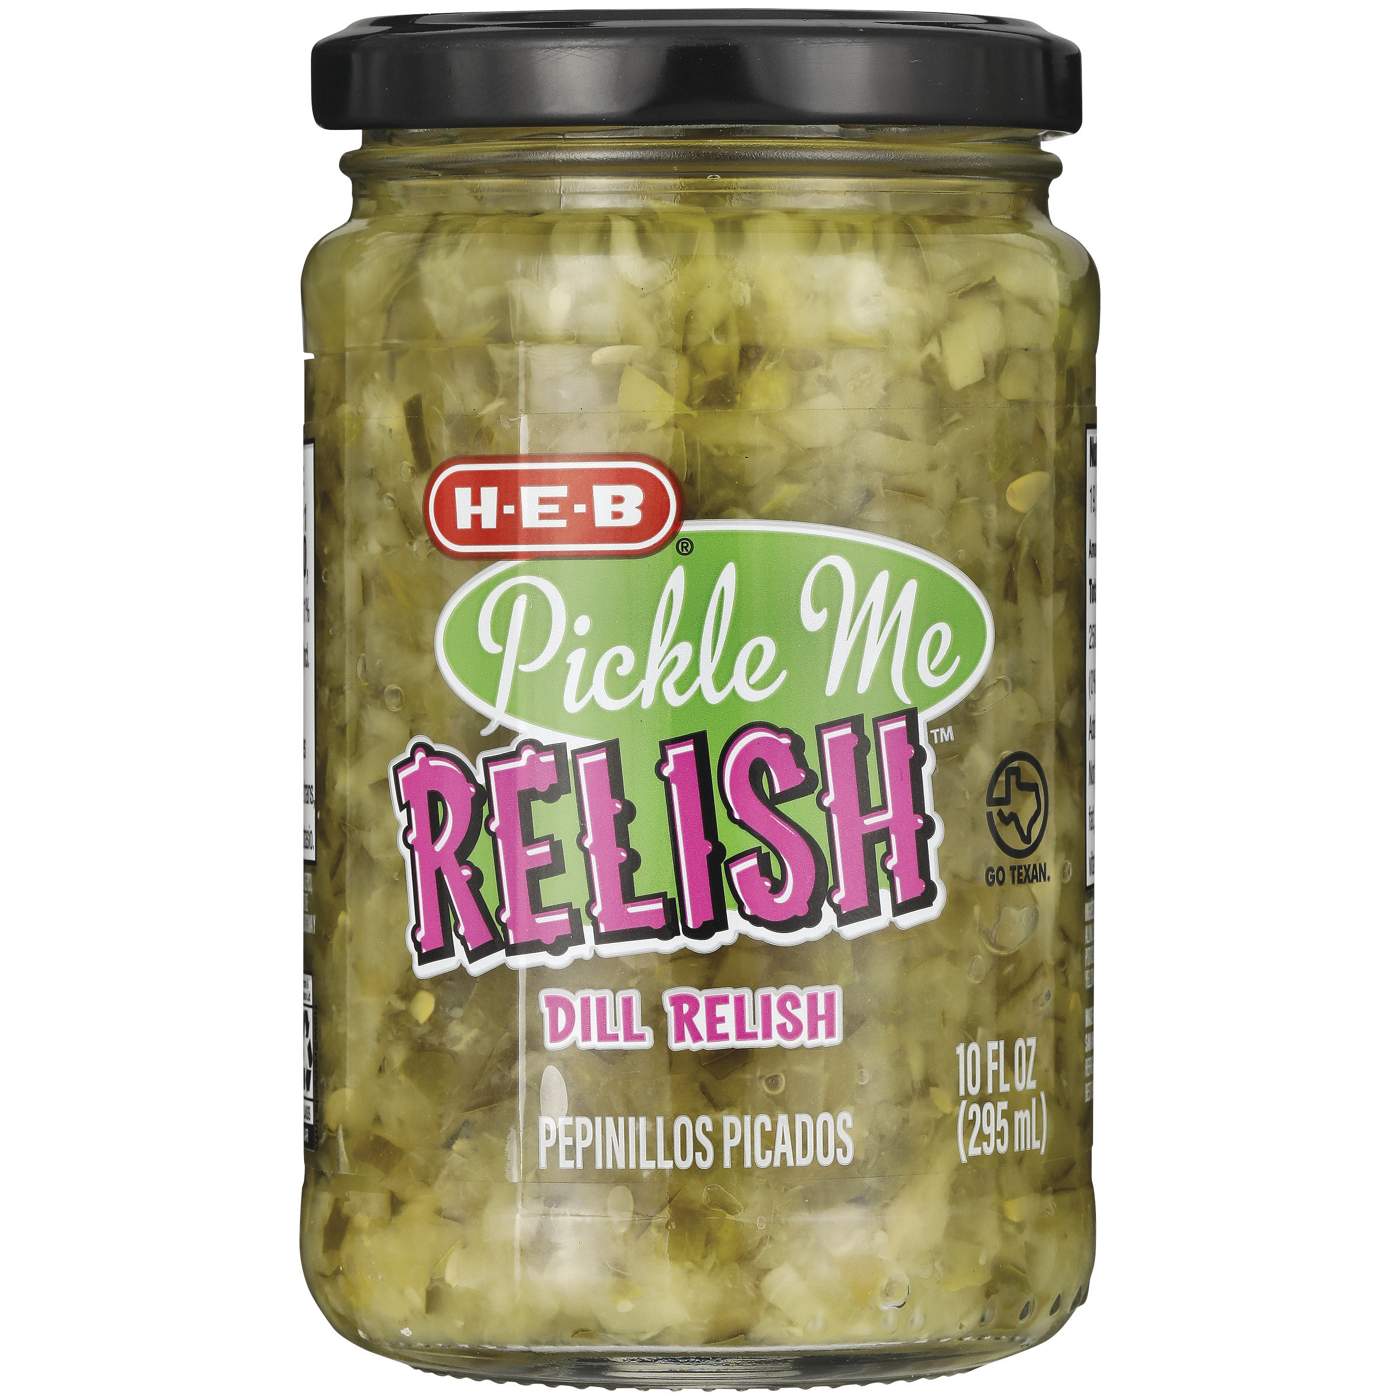 H-E-B Pickle Me Relish Dill Relish; image 1 of 2